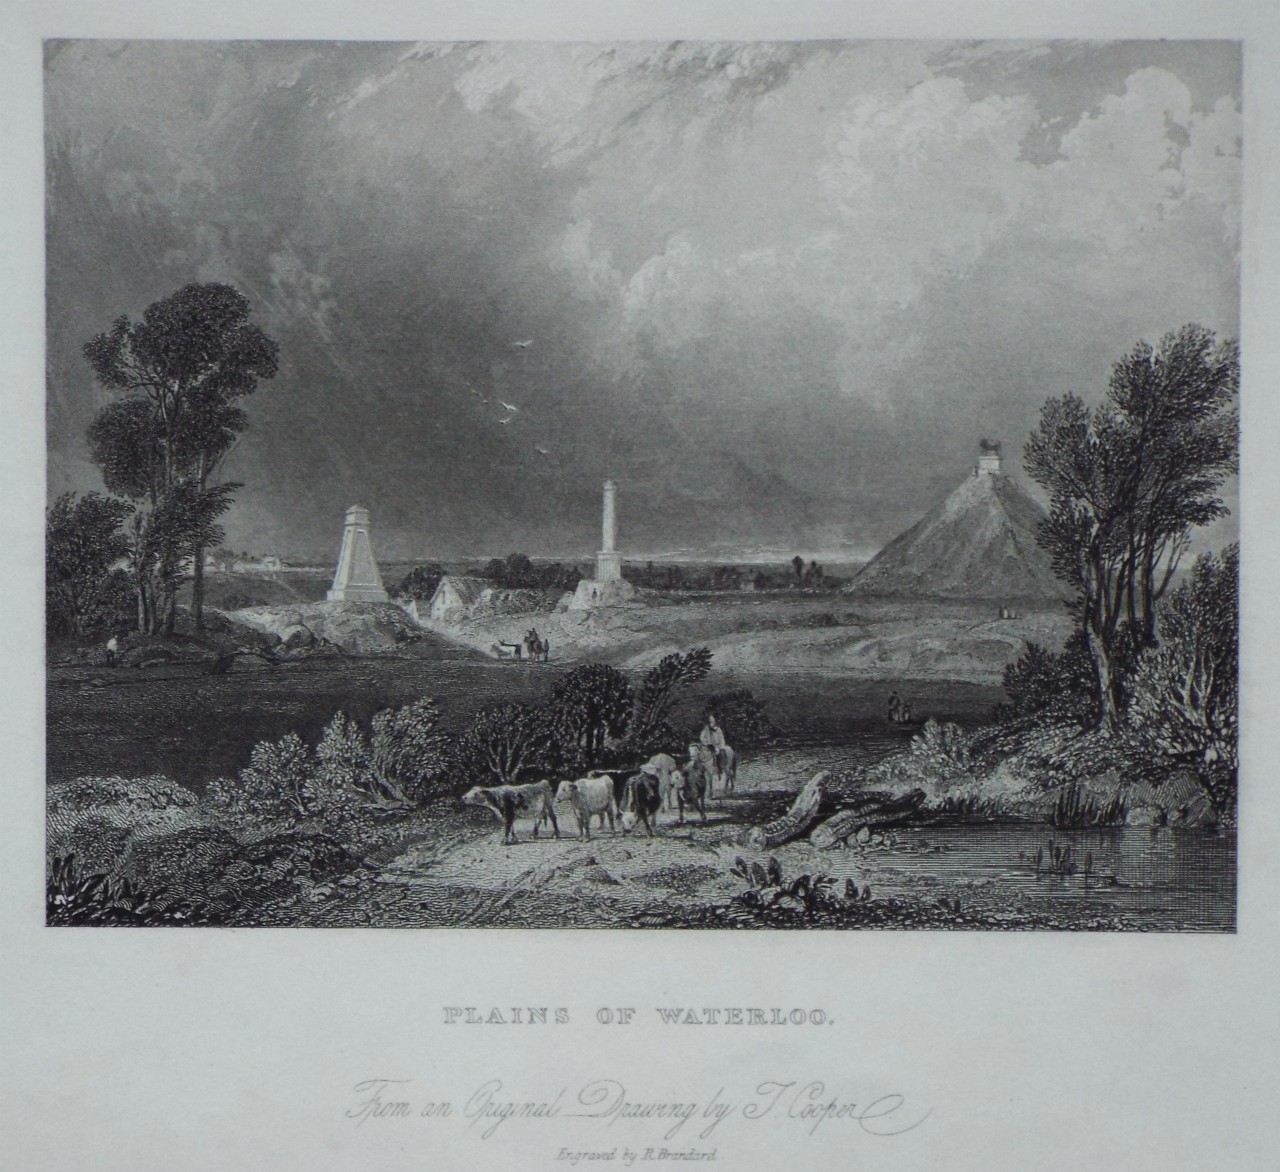 Print - Plains of Waterloo. From an Original Drawing by J. Cooper. - Brandard